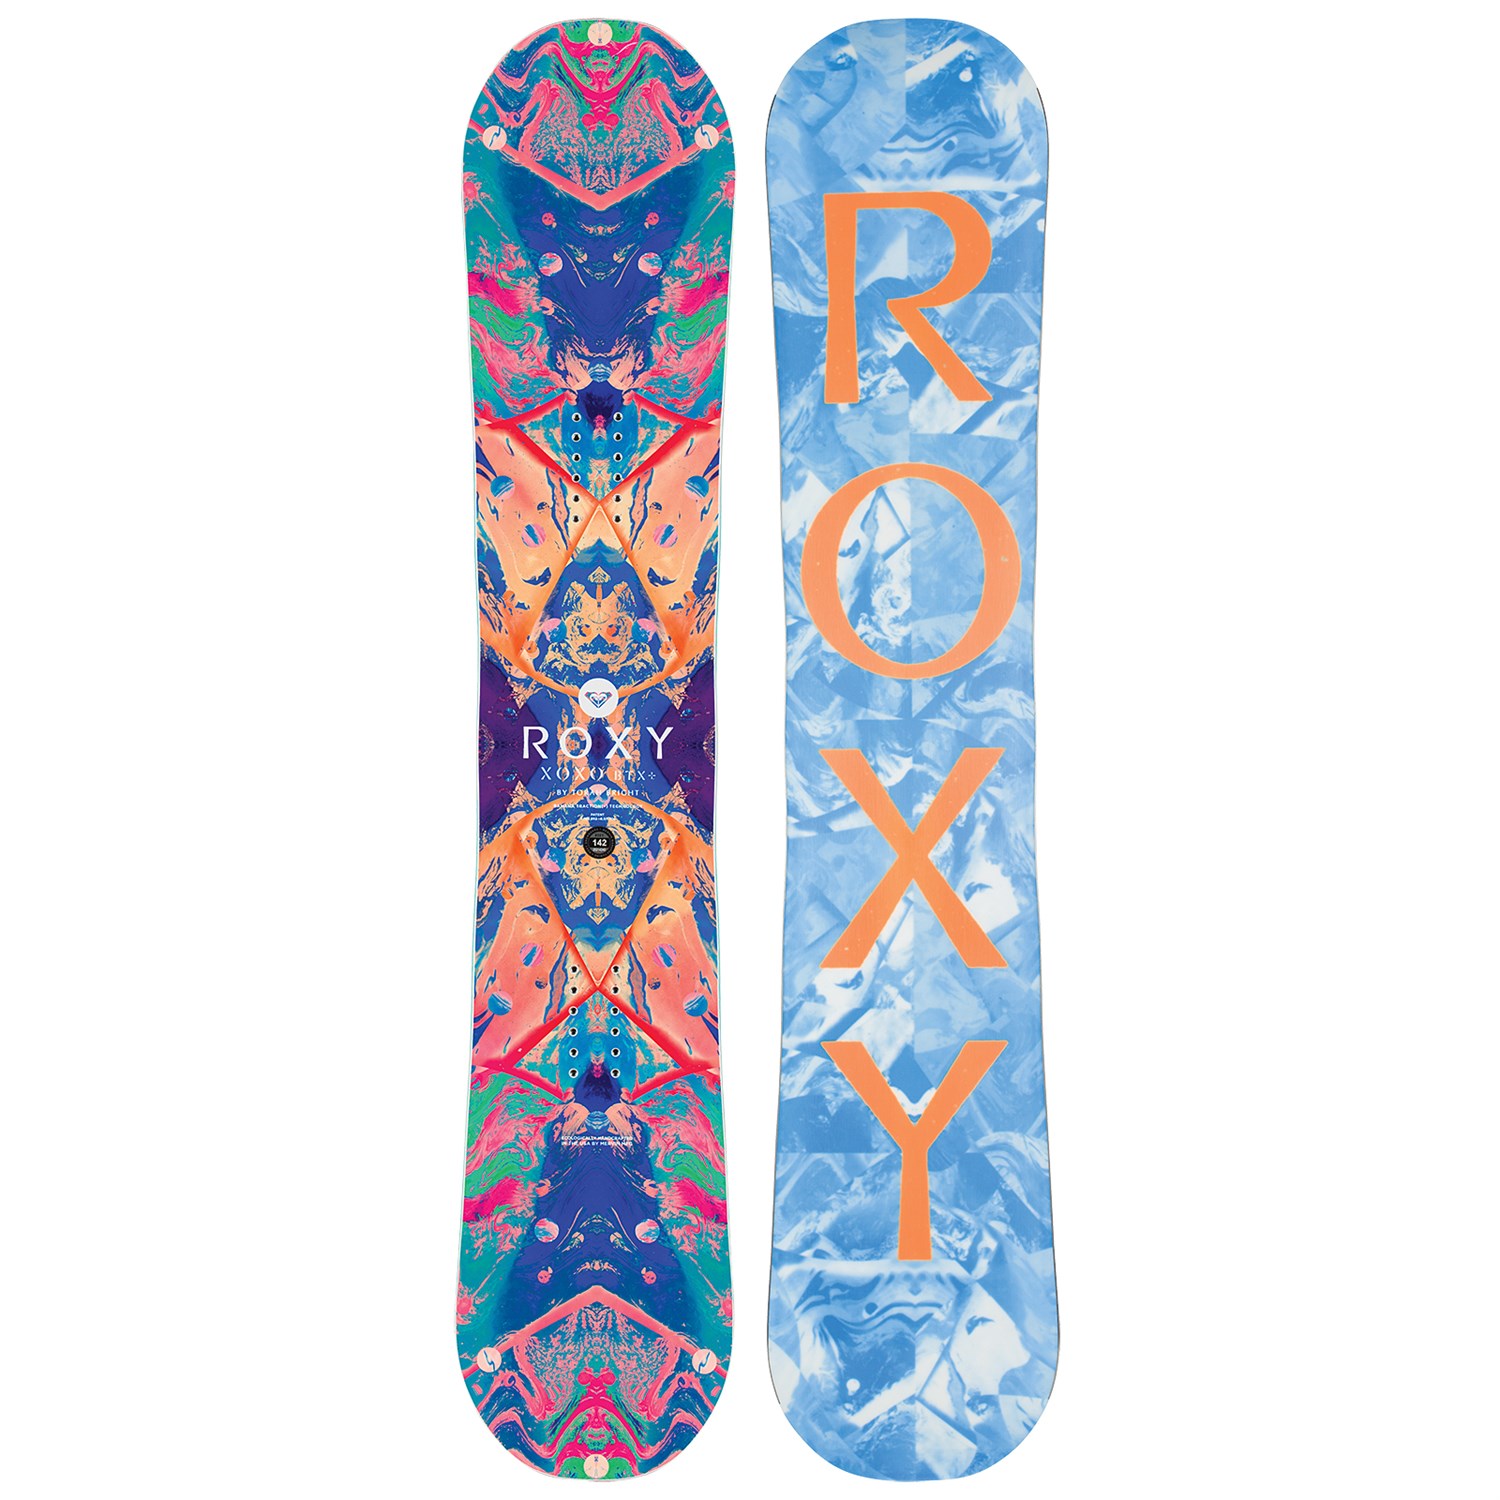 Roxy XOXO Flowers Snowboard - 2016/2017. The Best Women’s Snowboard Designs